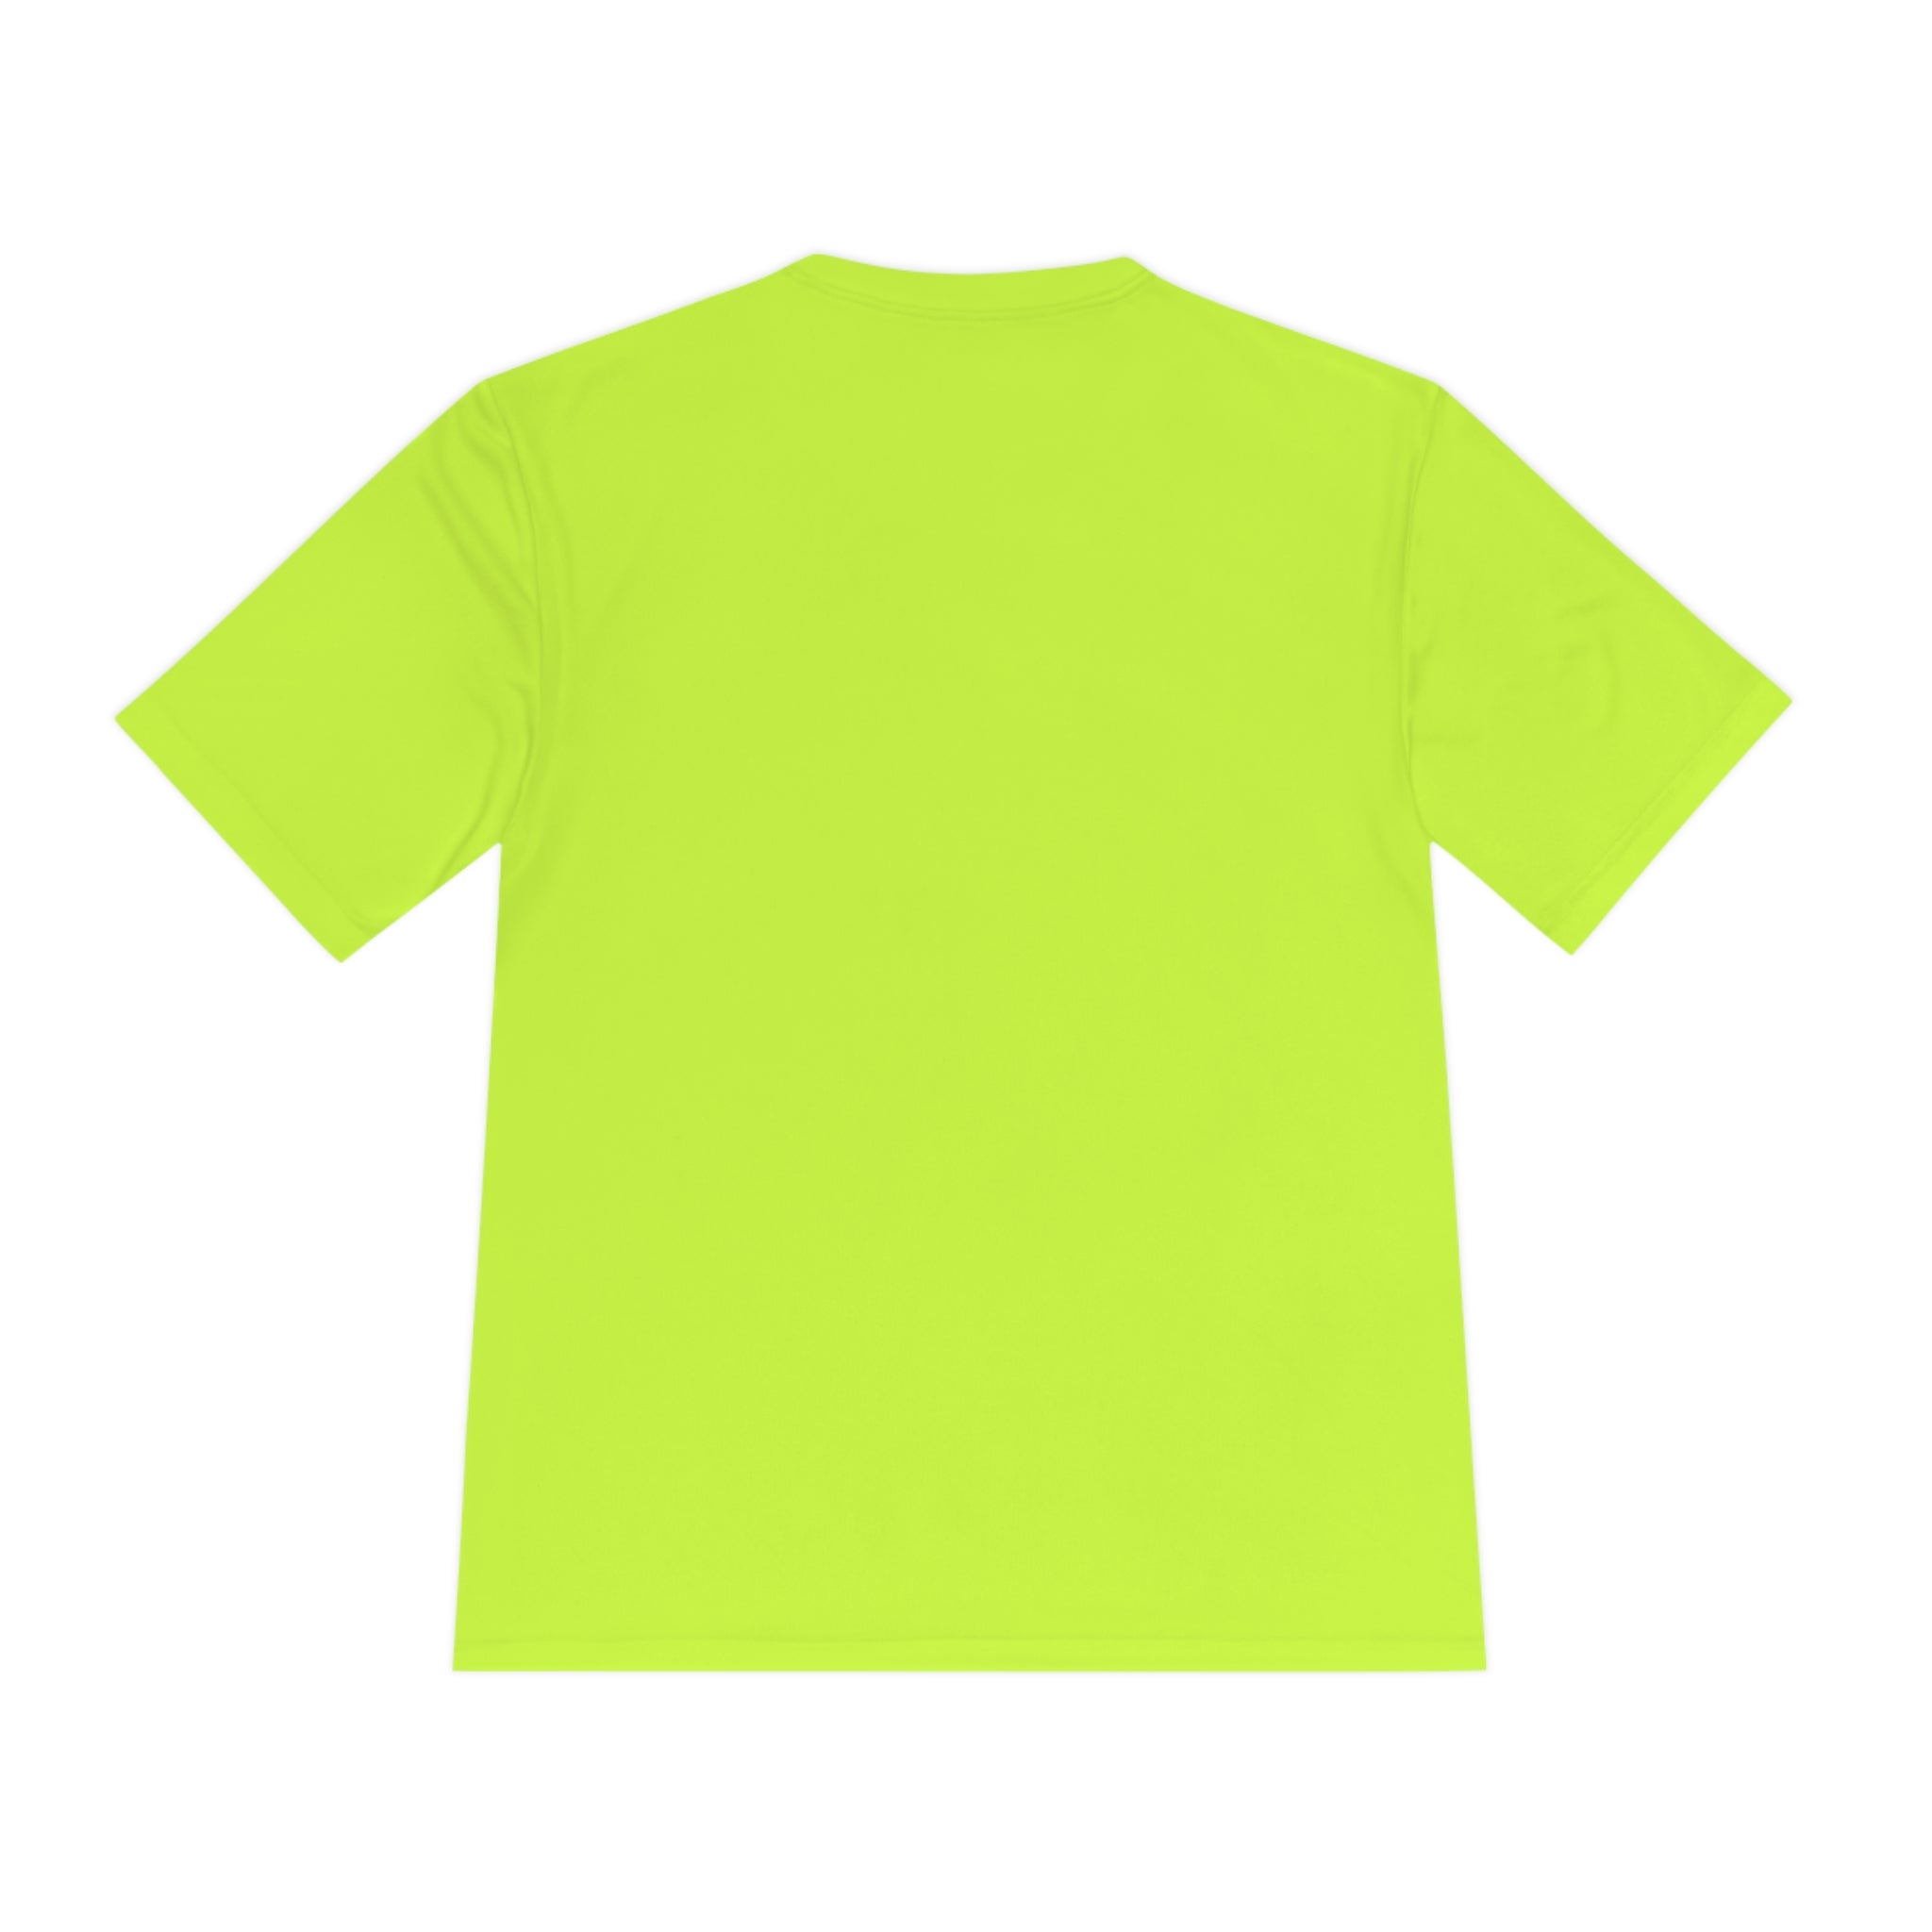 Athlete Tee - Neon Yellow